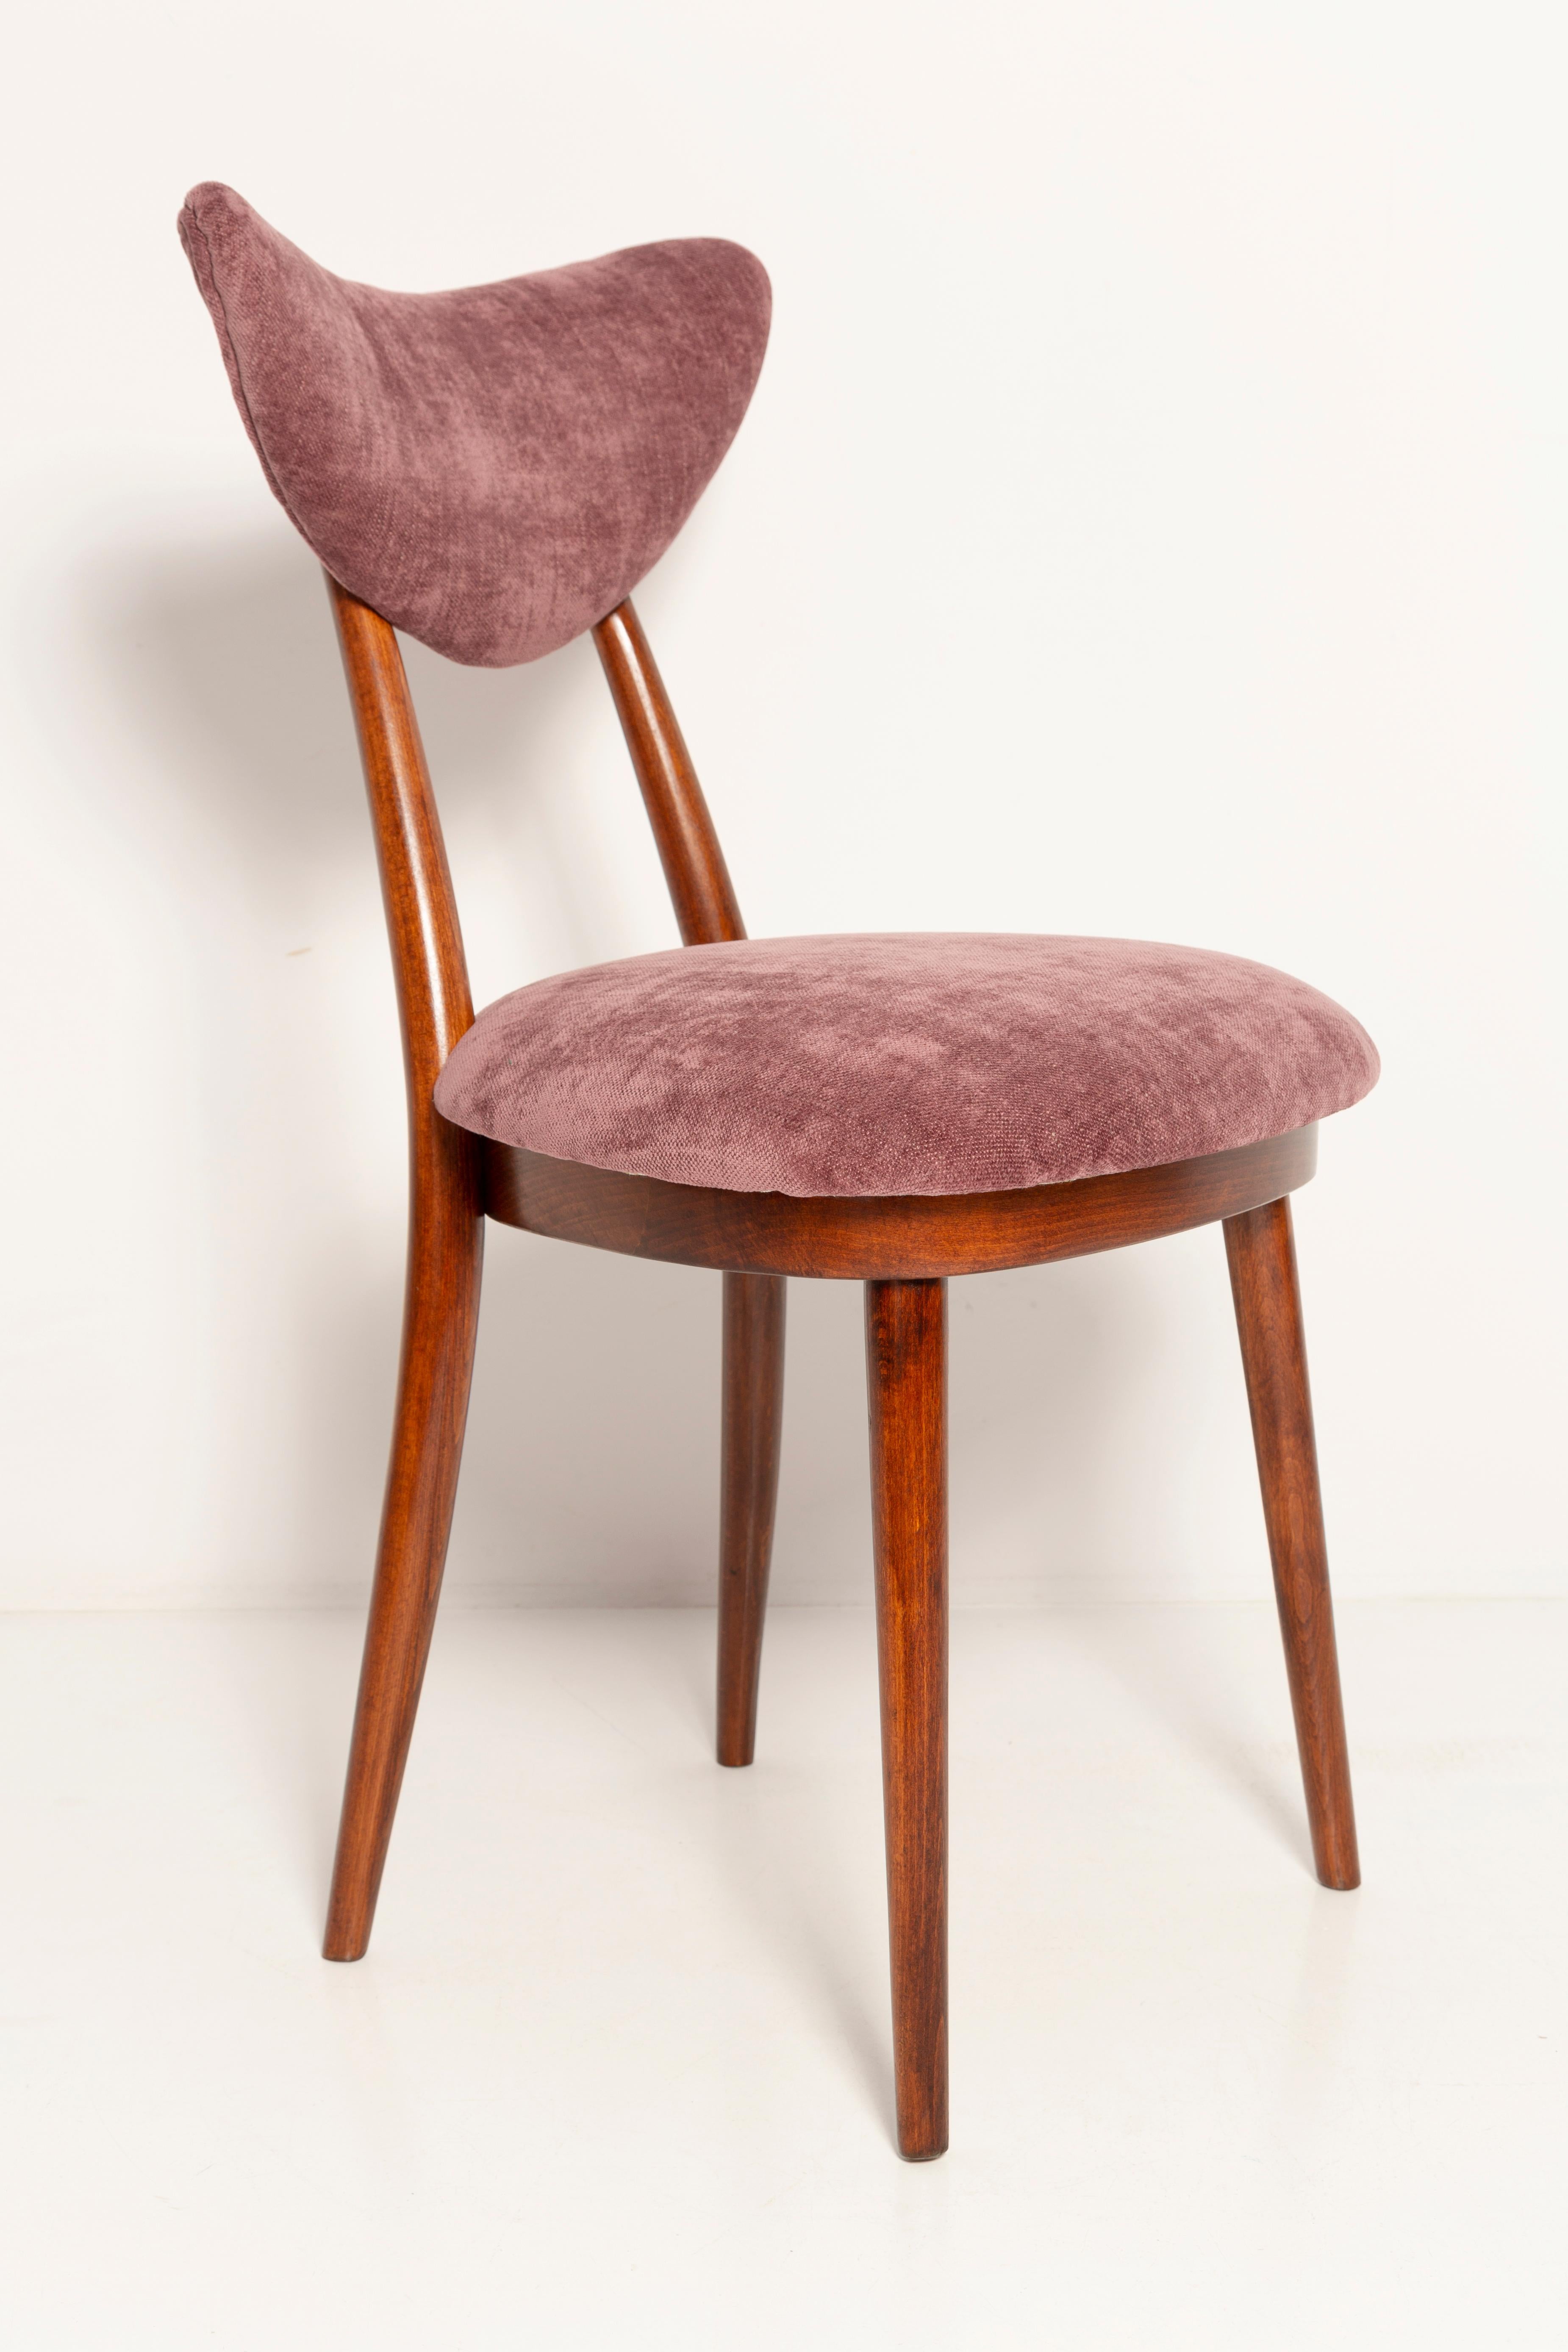 Midcentury Burgundy Pink Violet Velvet Heart Chair, Europa, 1960er Jahre (20. Jahrhundert) im Angebot